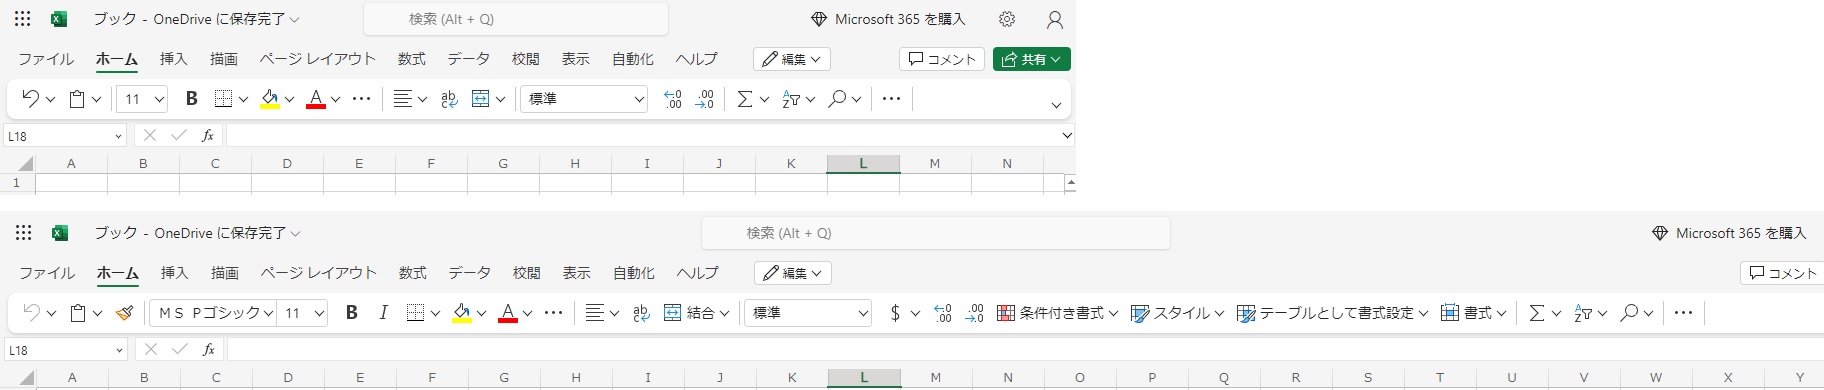 Excelの縦長画面と横長画面